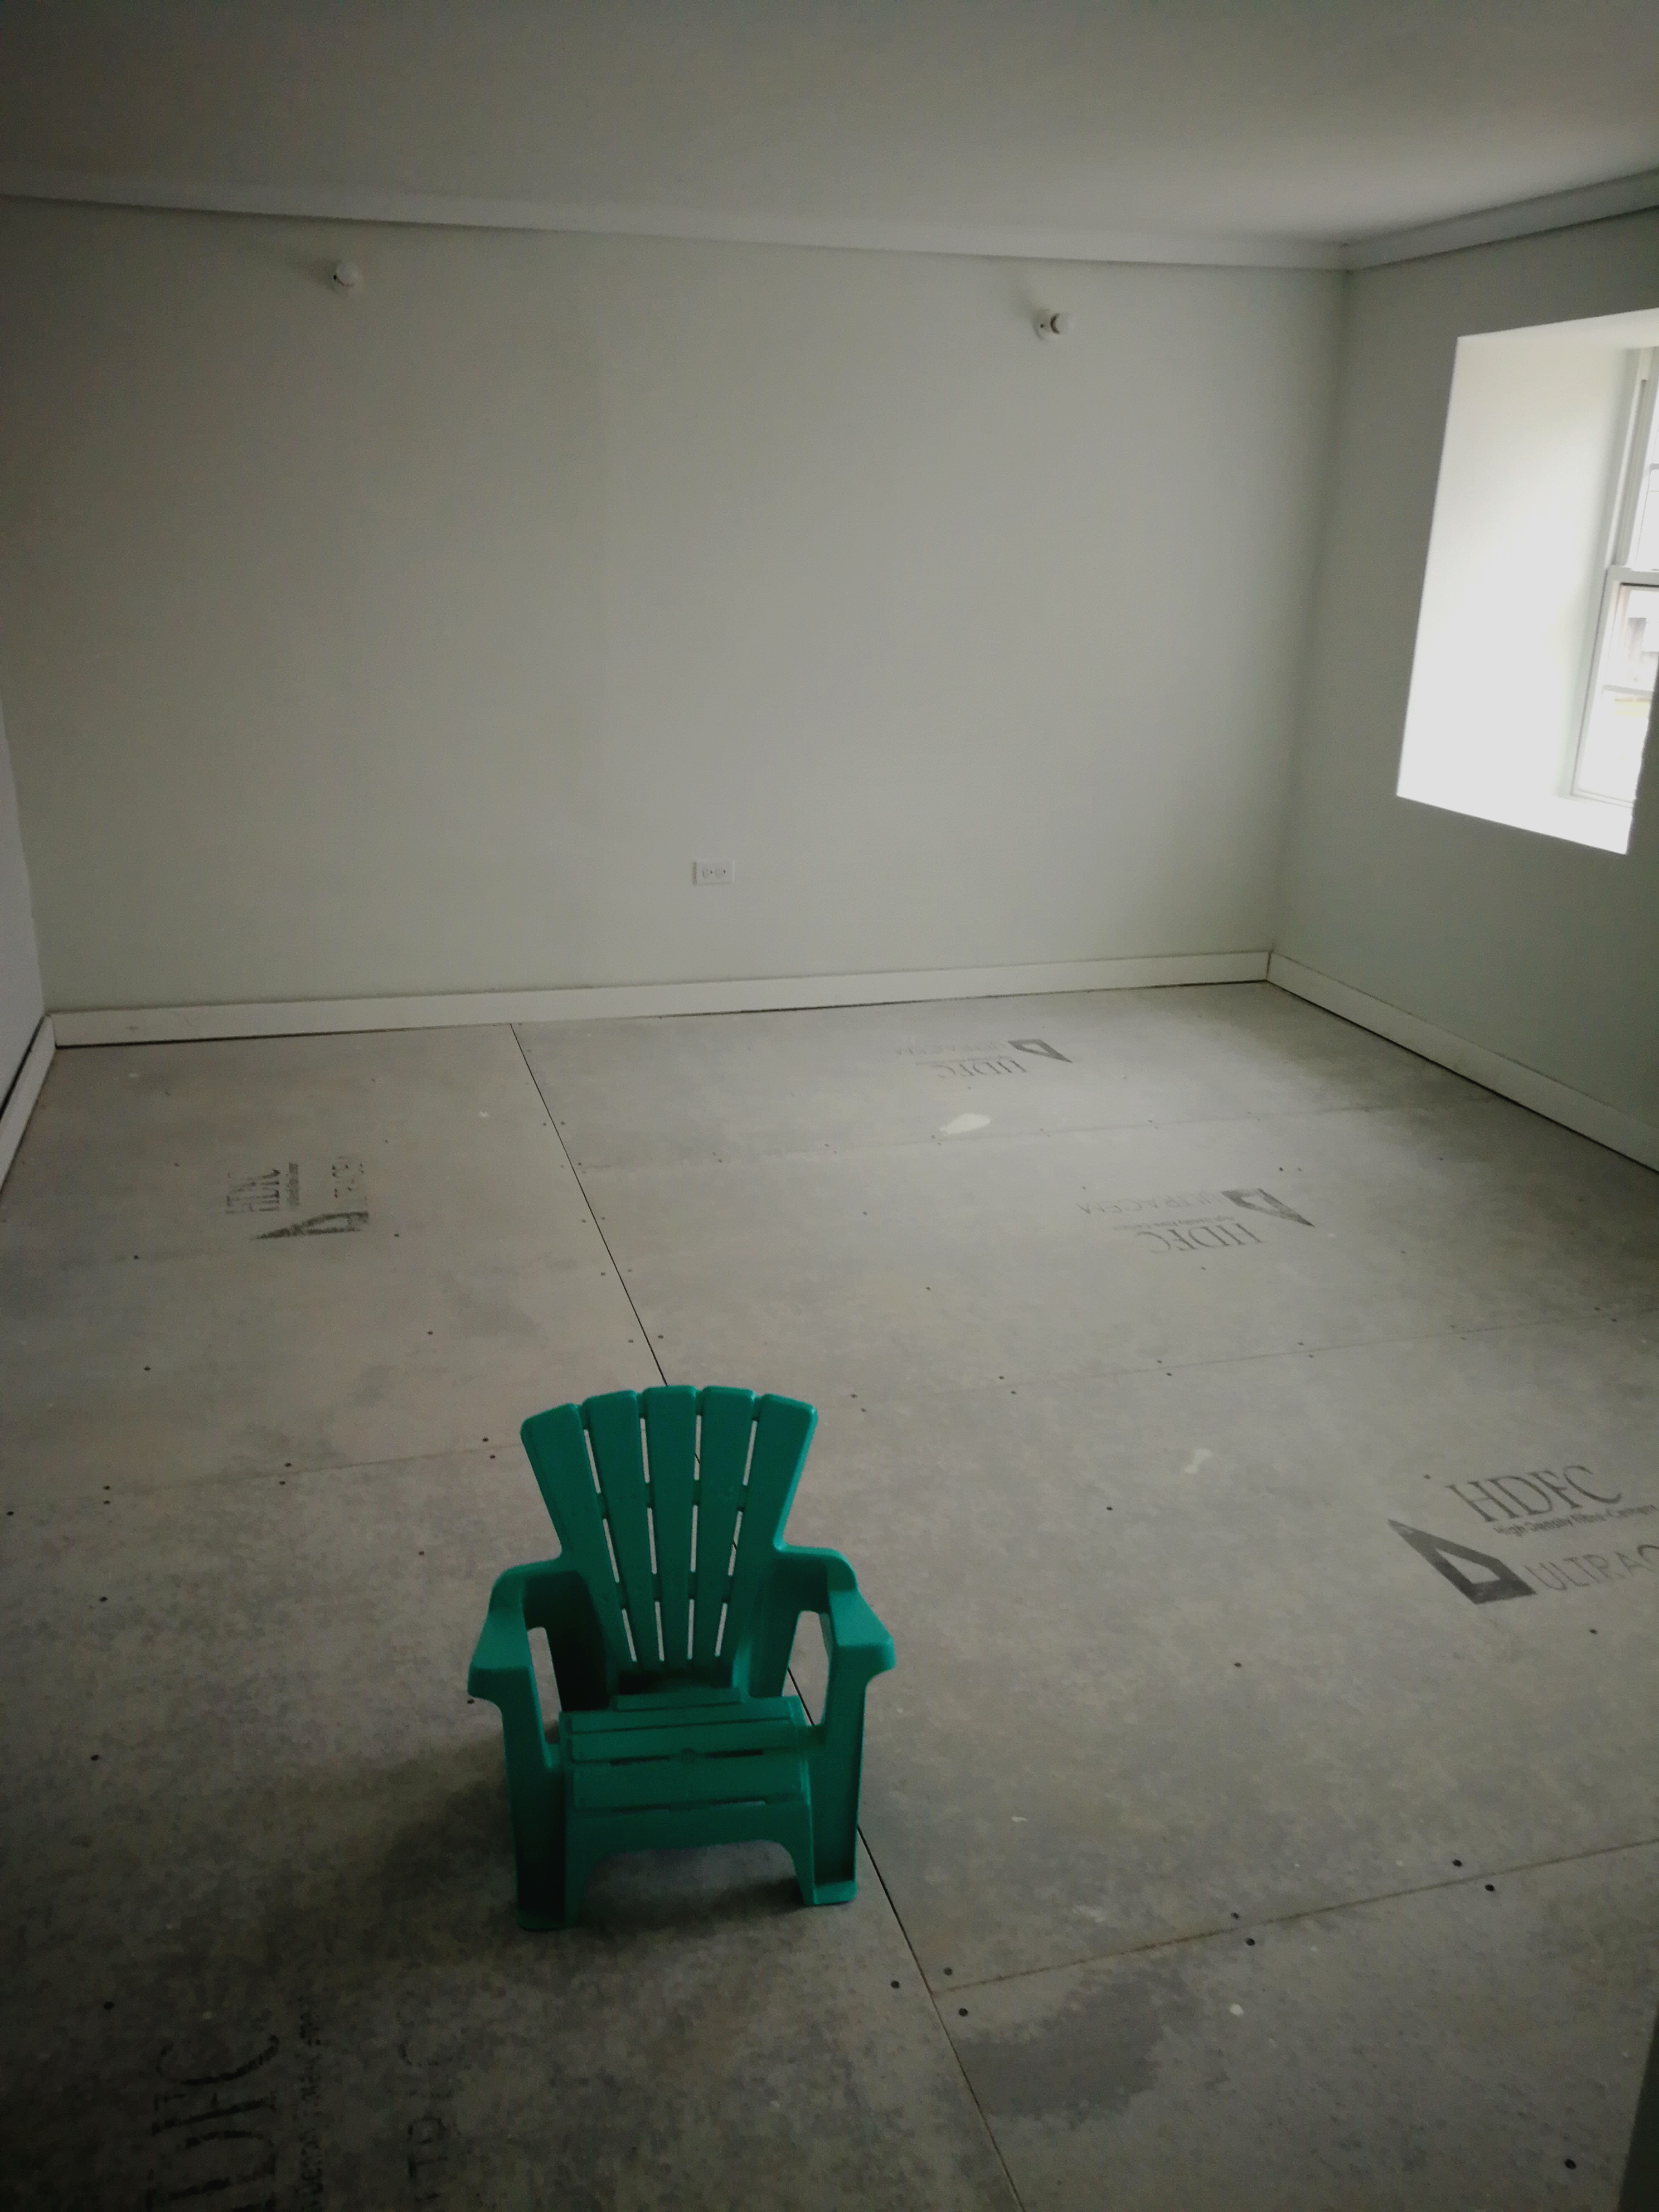 Apt 1 - Living Room Baby Furniture - Jun 2019